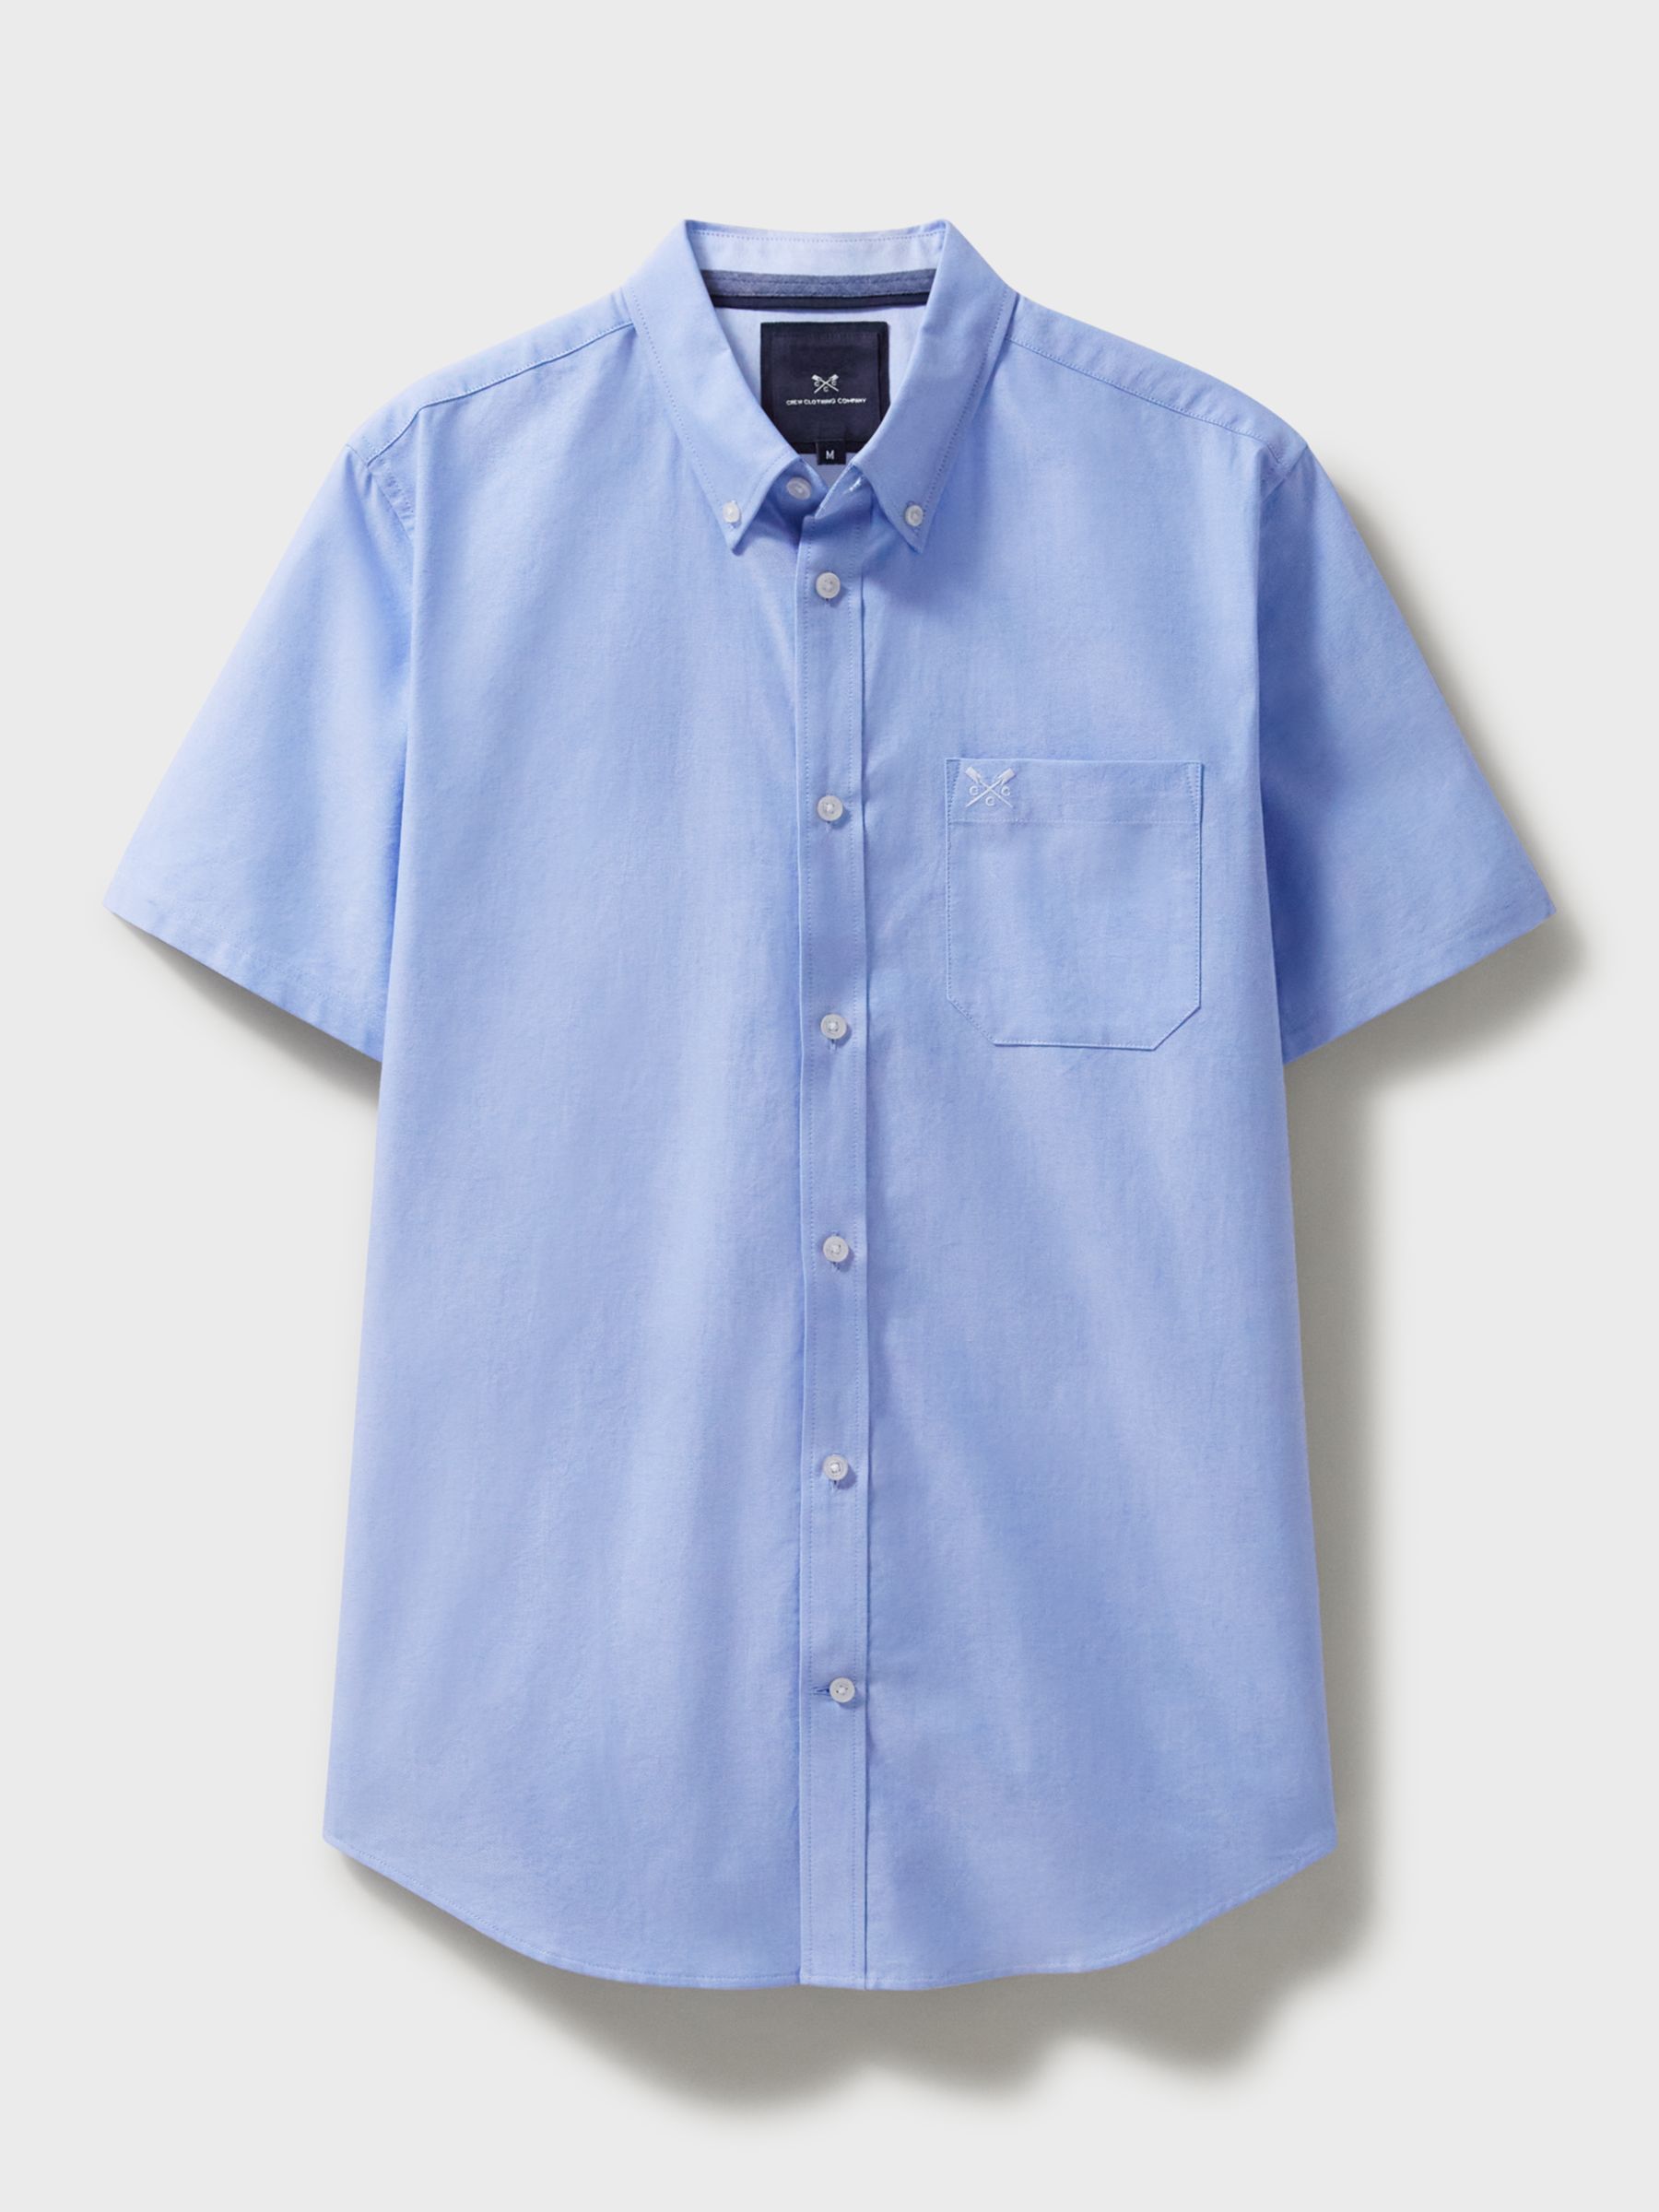 Crew Clothing Short Sleeve Oxford Shirt, Sky Blue, L